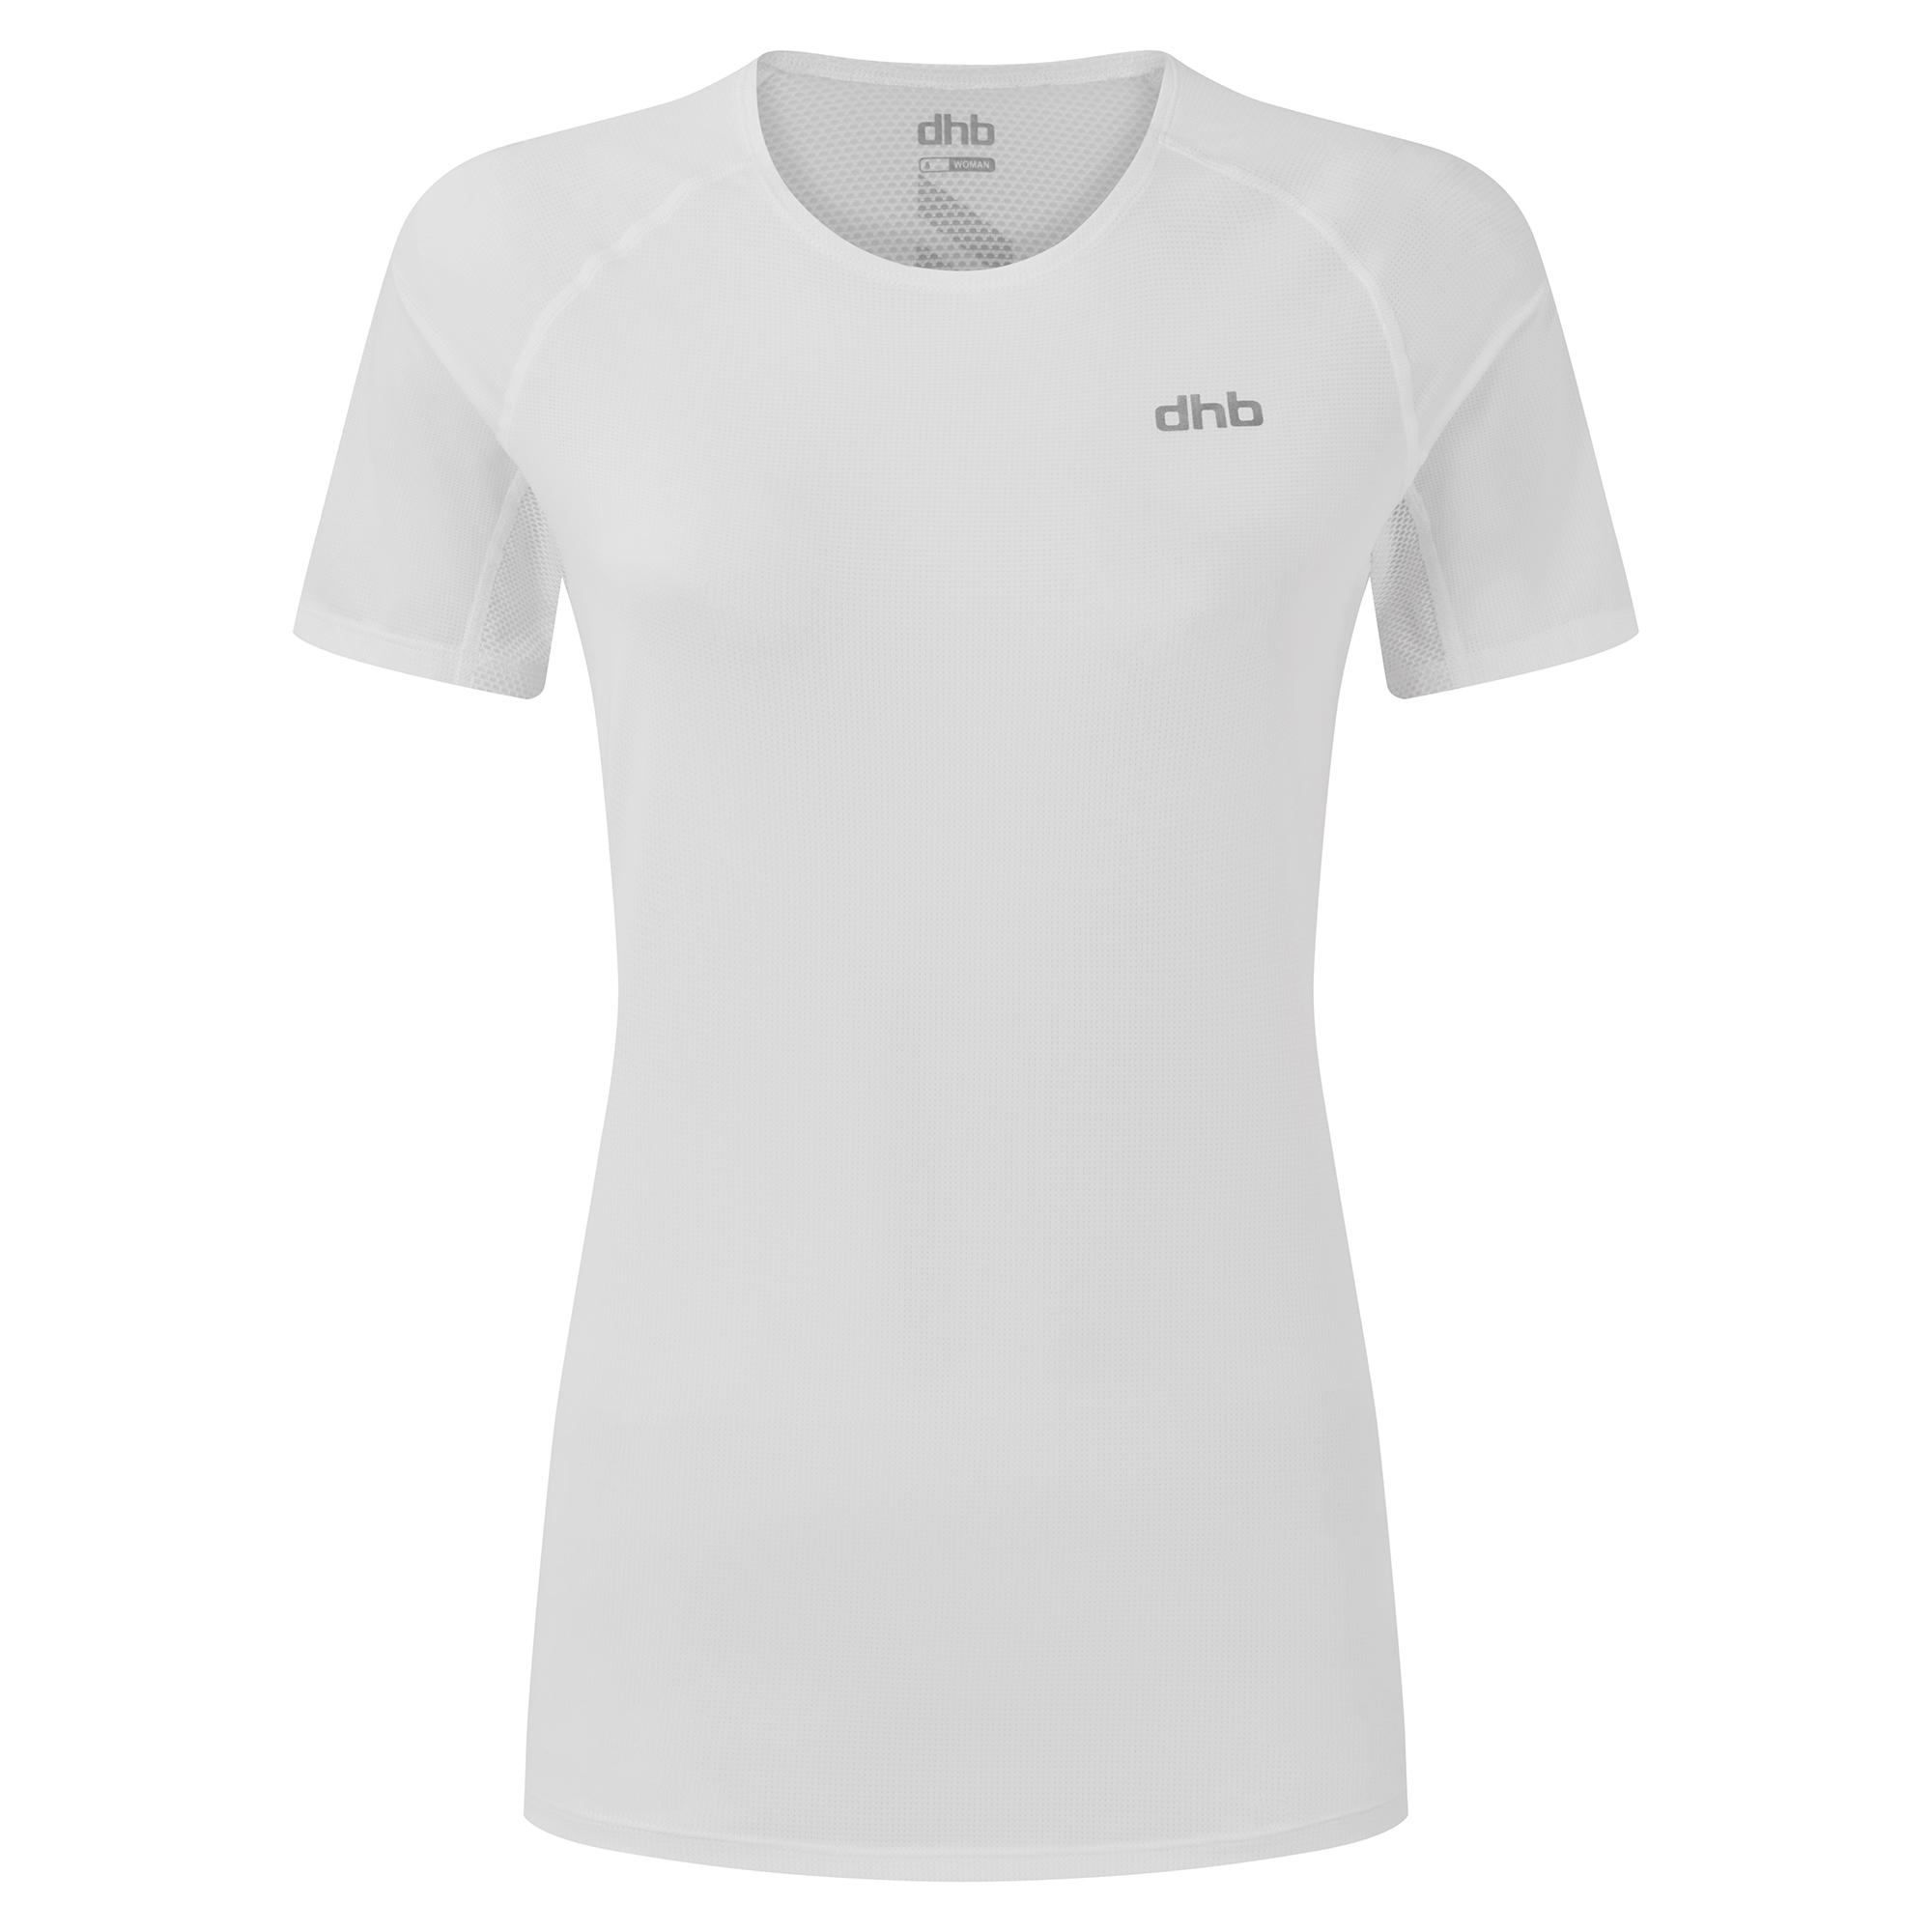 Dhb Aeron Womens Short Sleeve Run Top - White